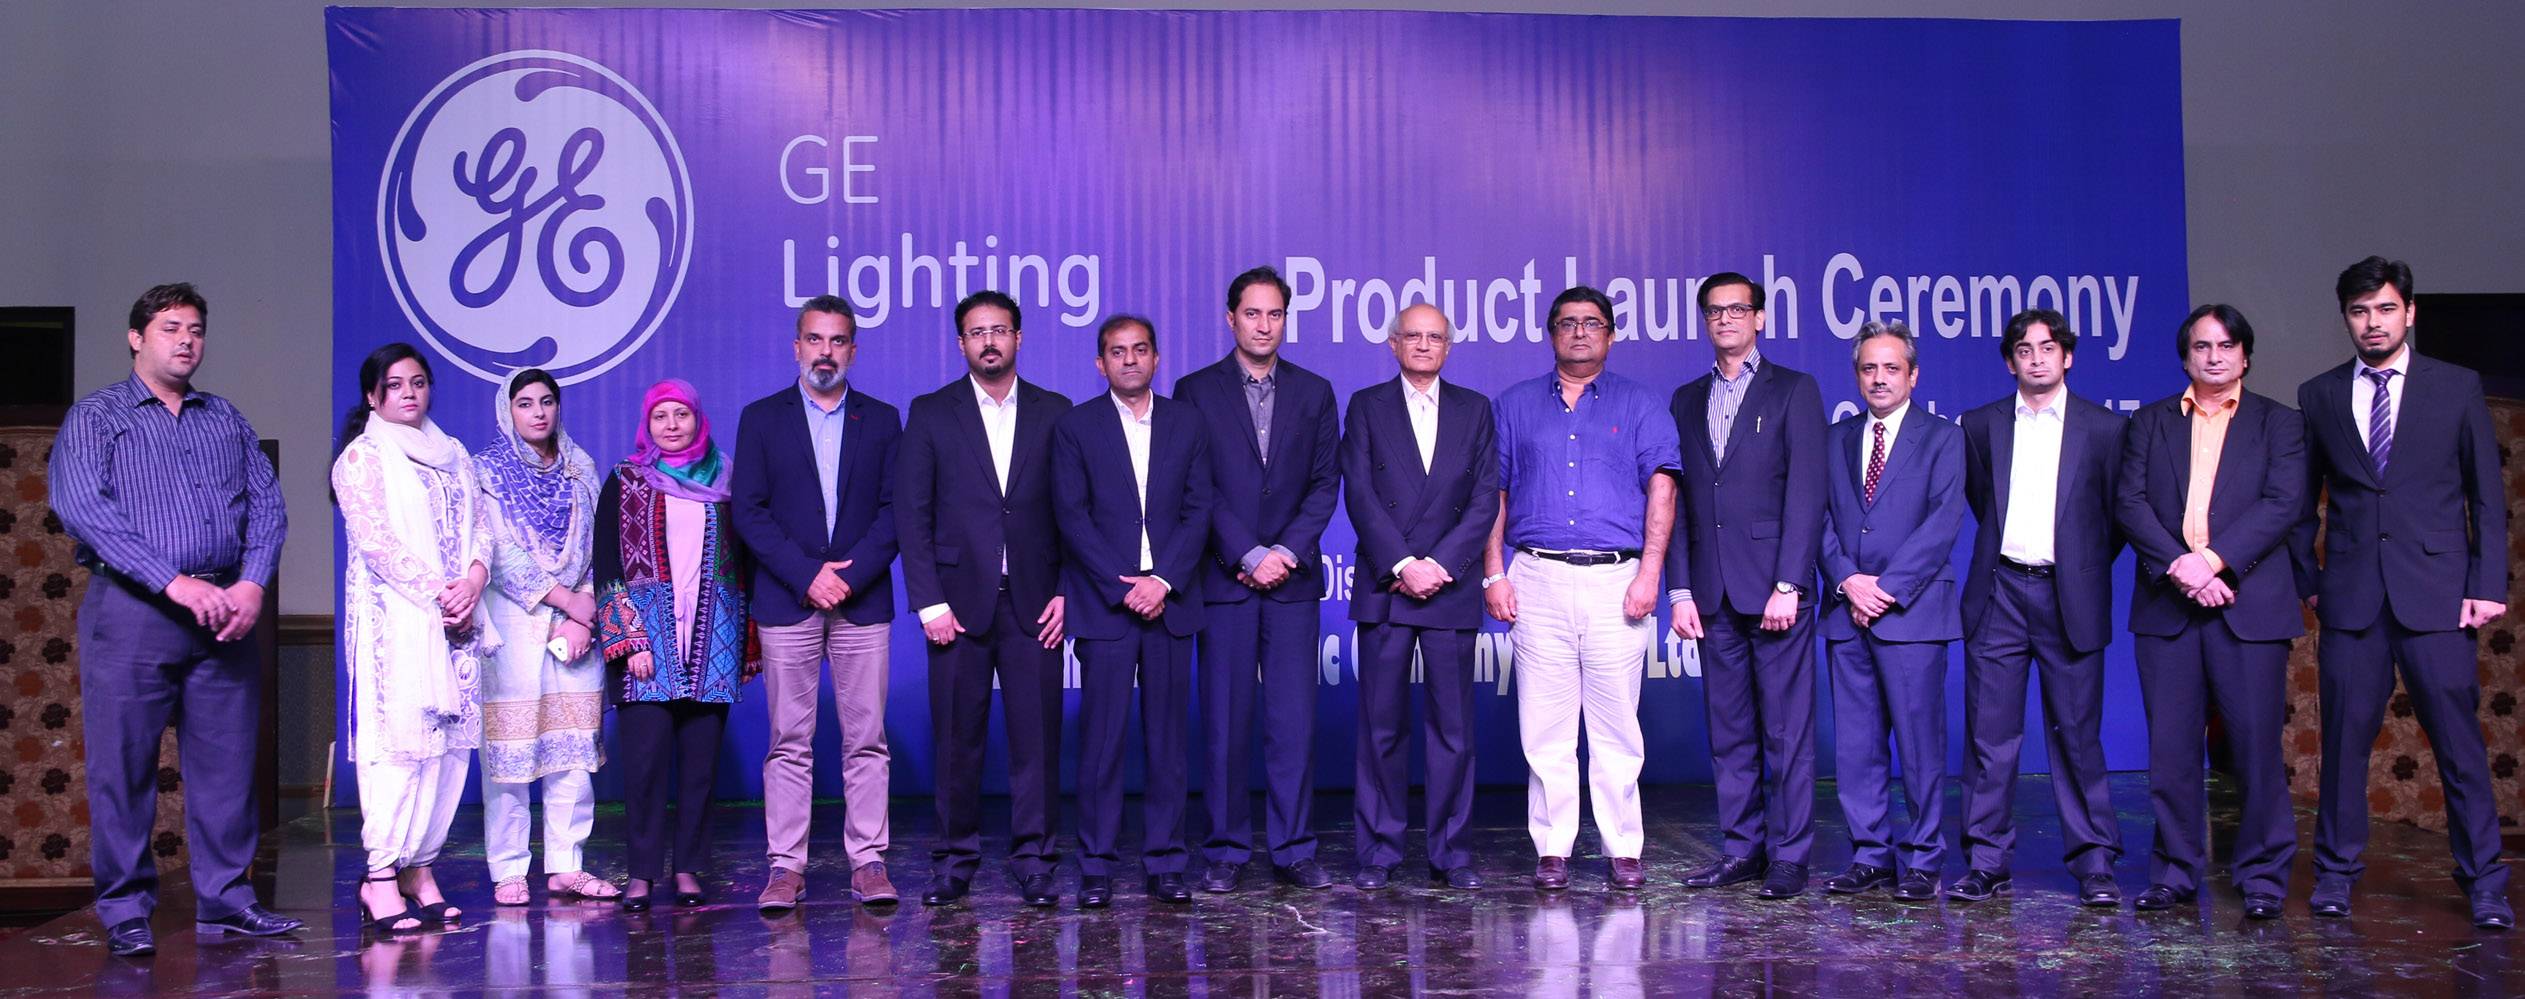 GE Lighting and IEC announce strategic partnership